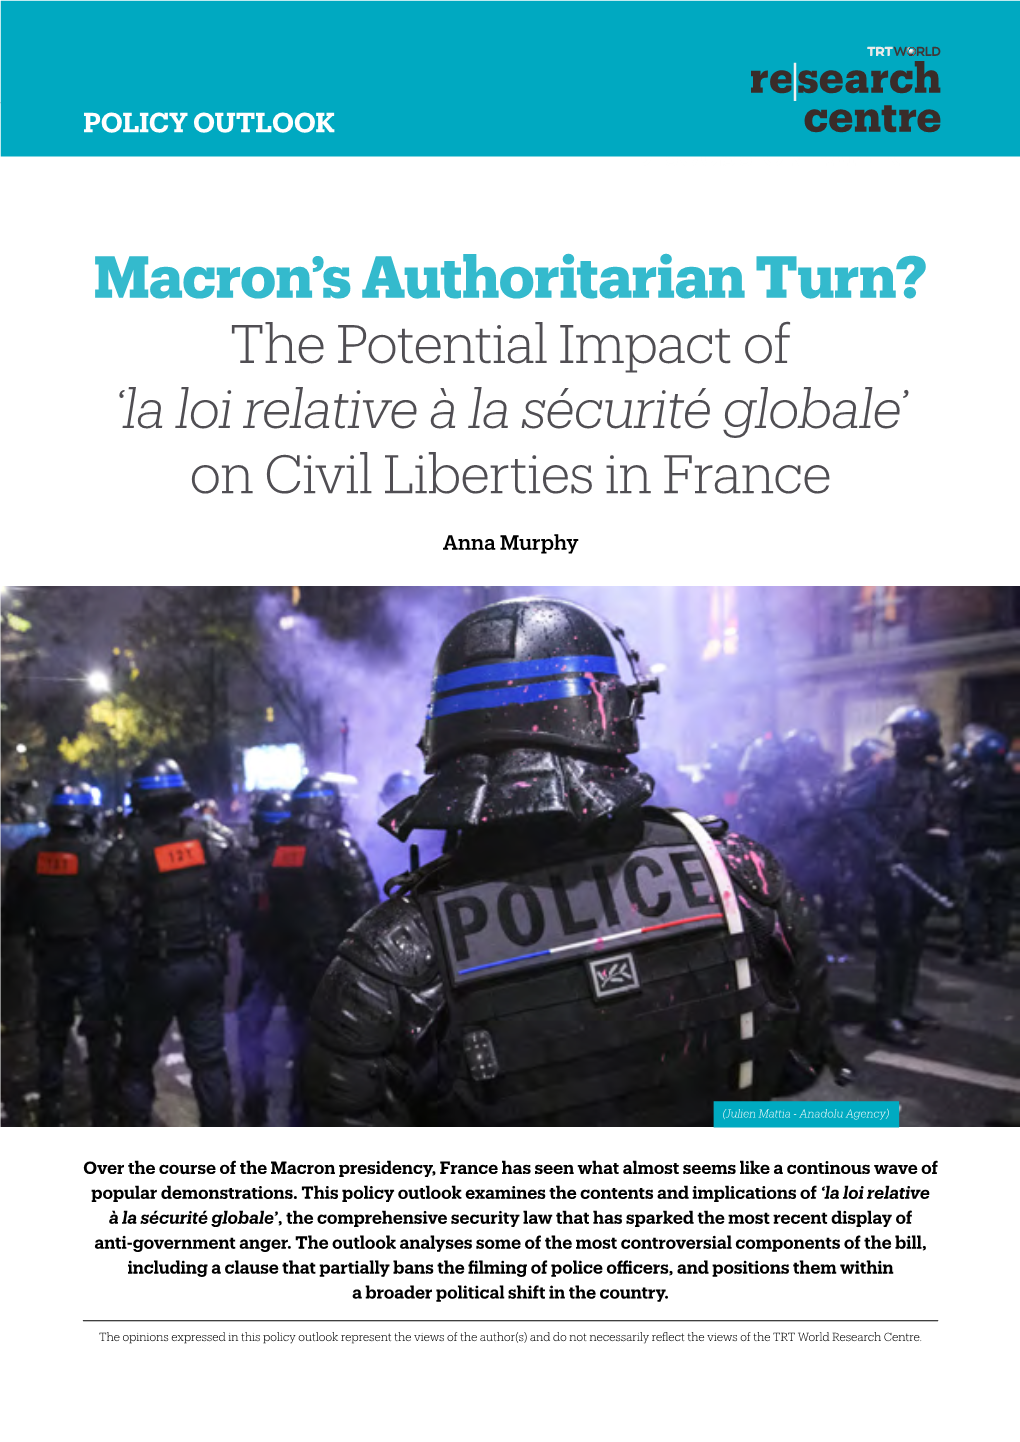 Macron's Authoritarian Turn?